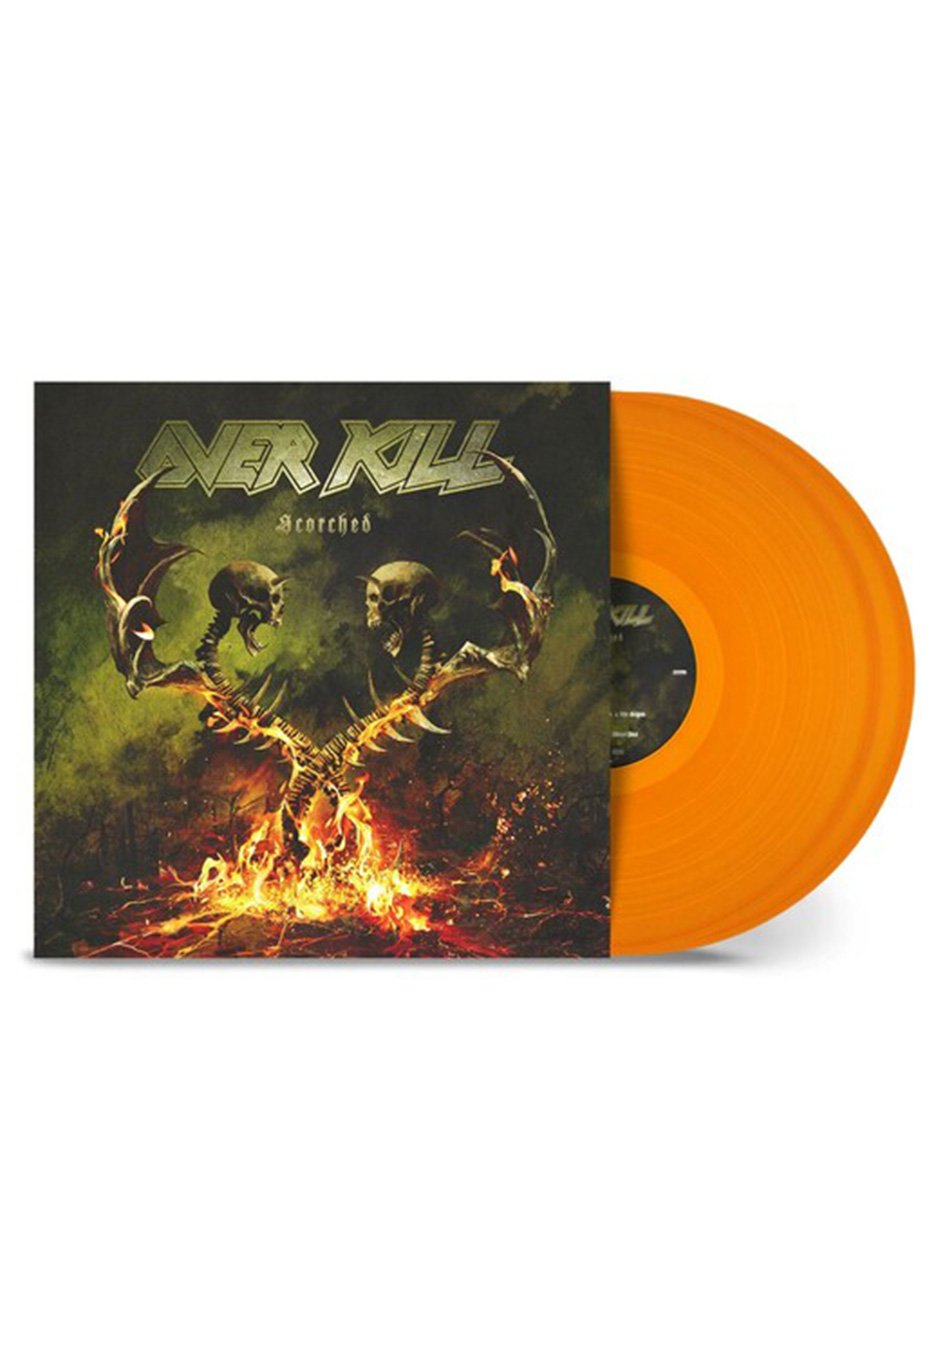 Overkill - Scorched Ltd. Orange - Colored 2 Vinyl